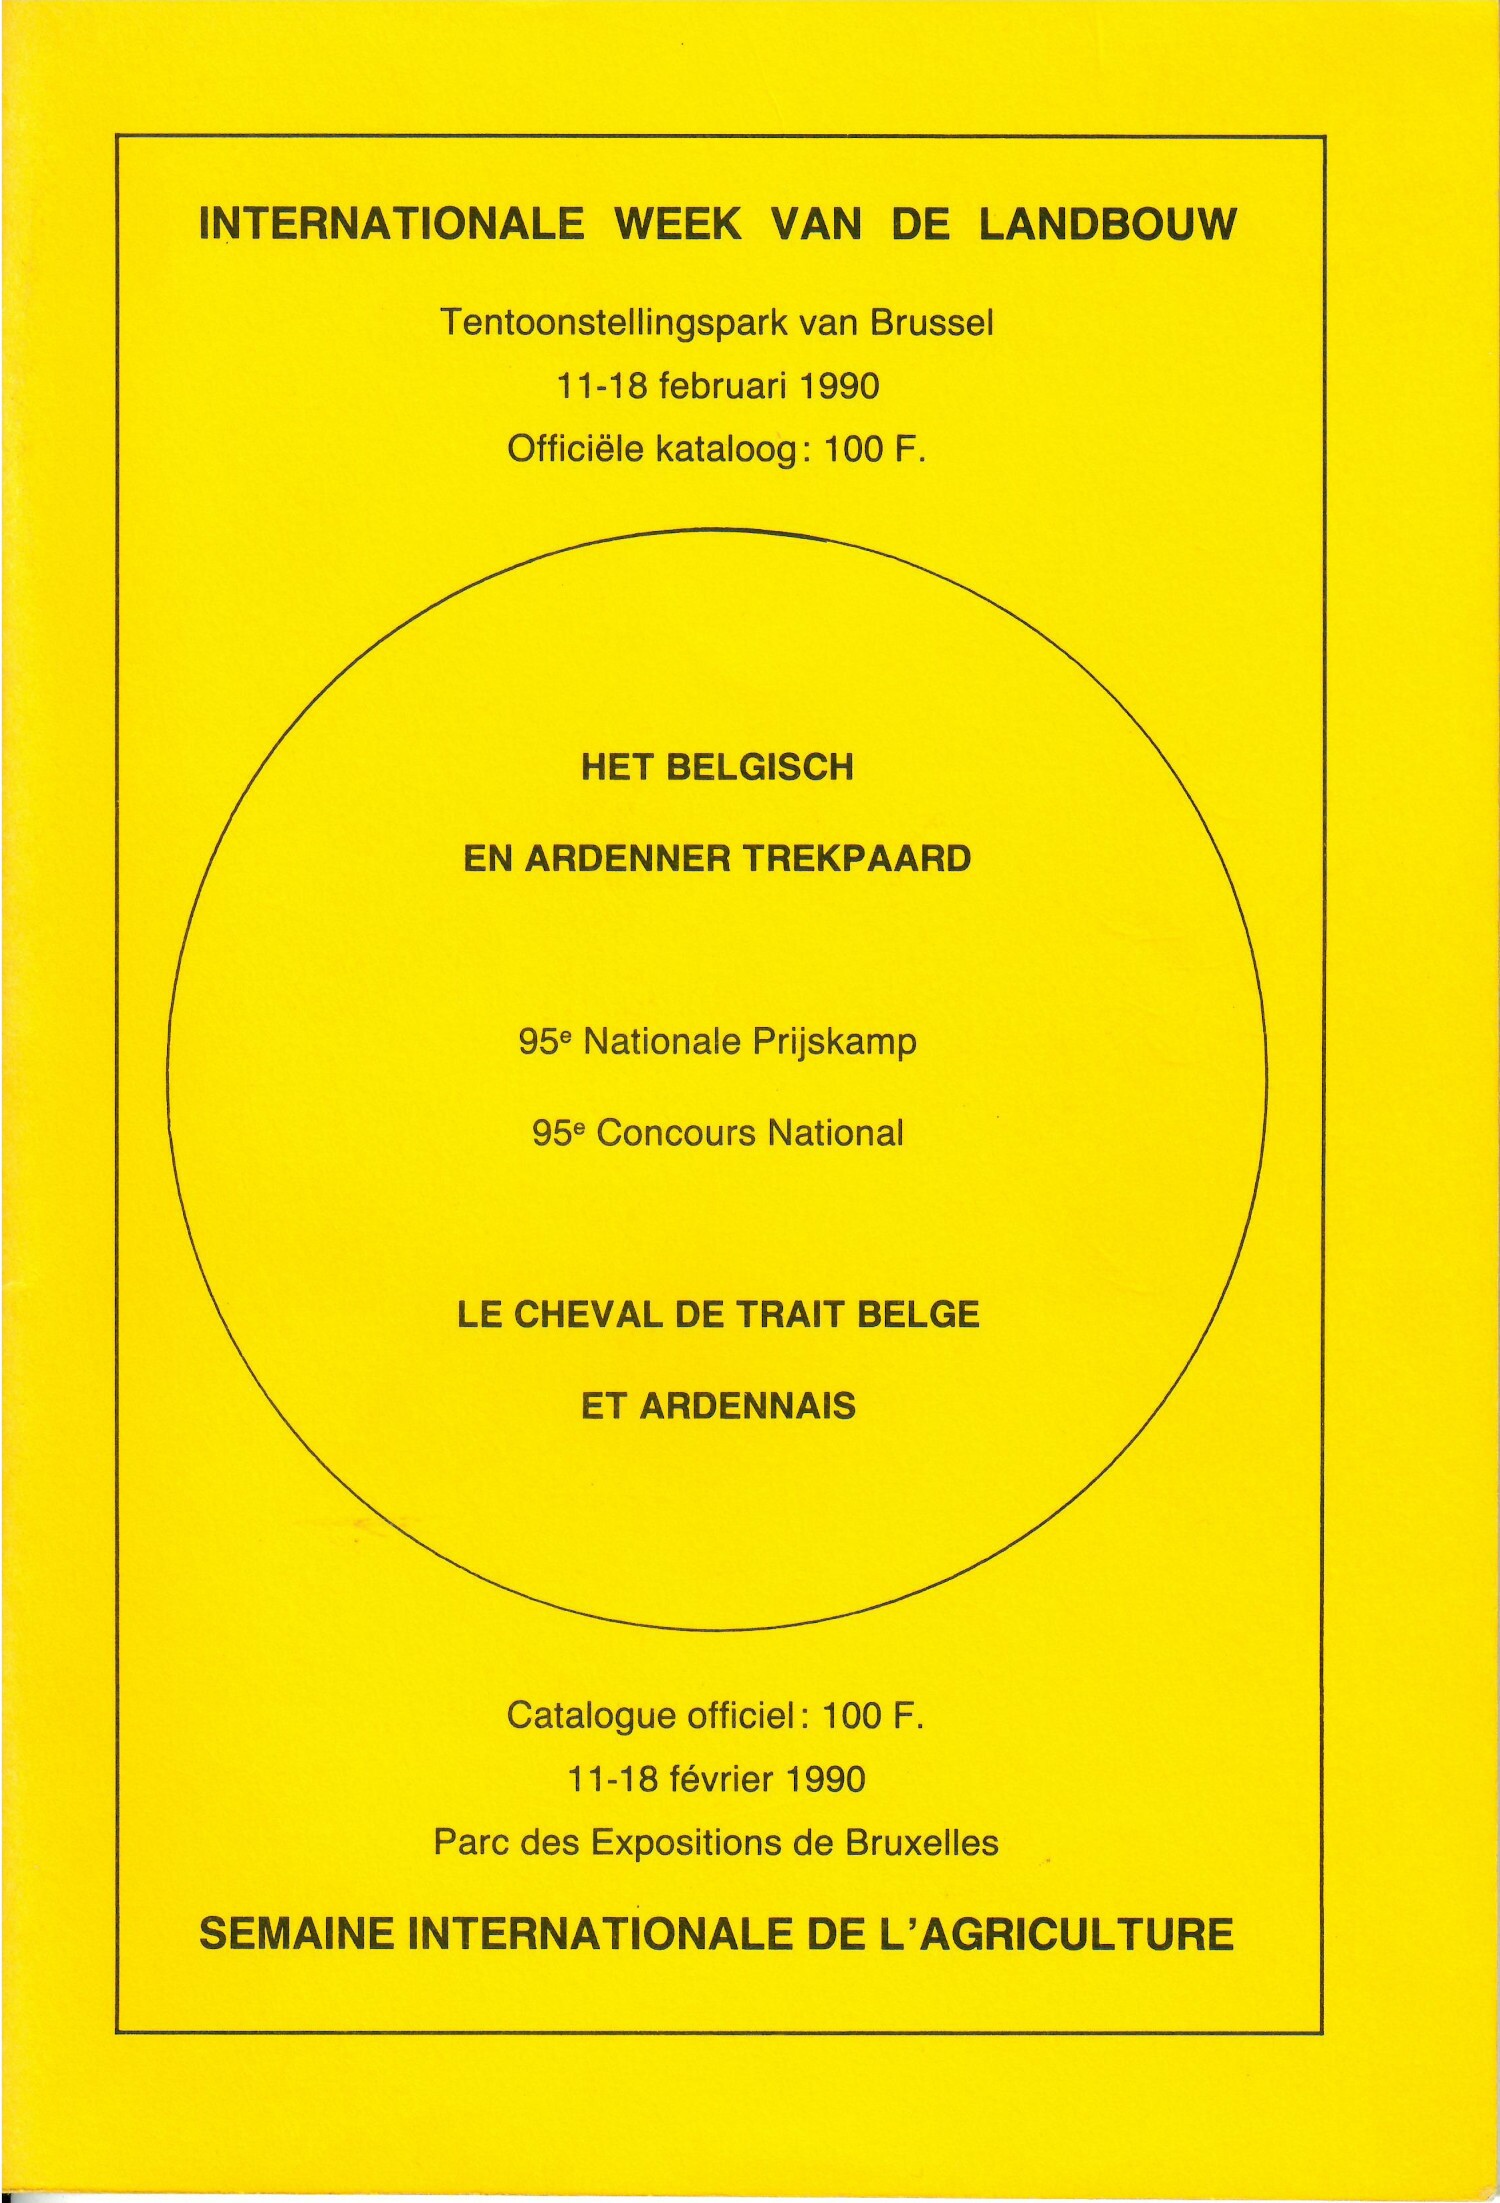 Les Cheval de trait belge et adennes 1990 (Herausgeber RR-R)